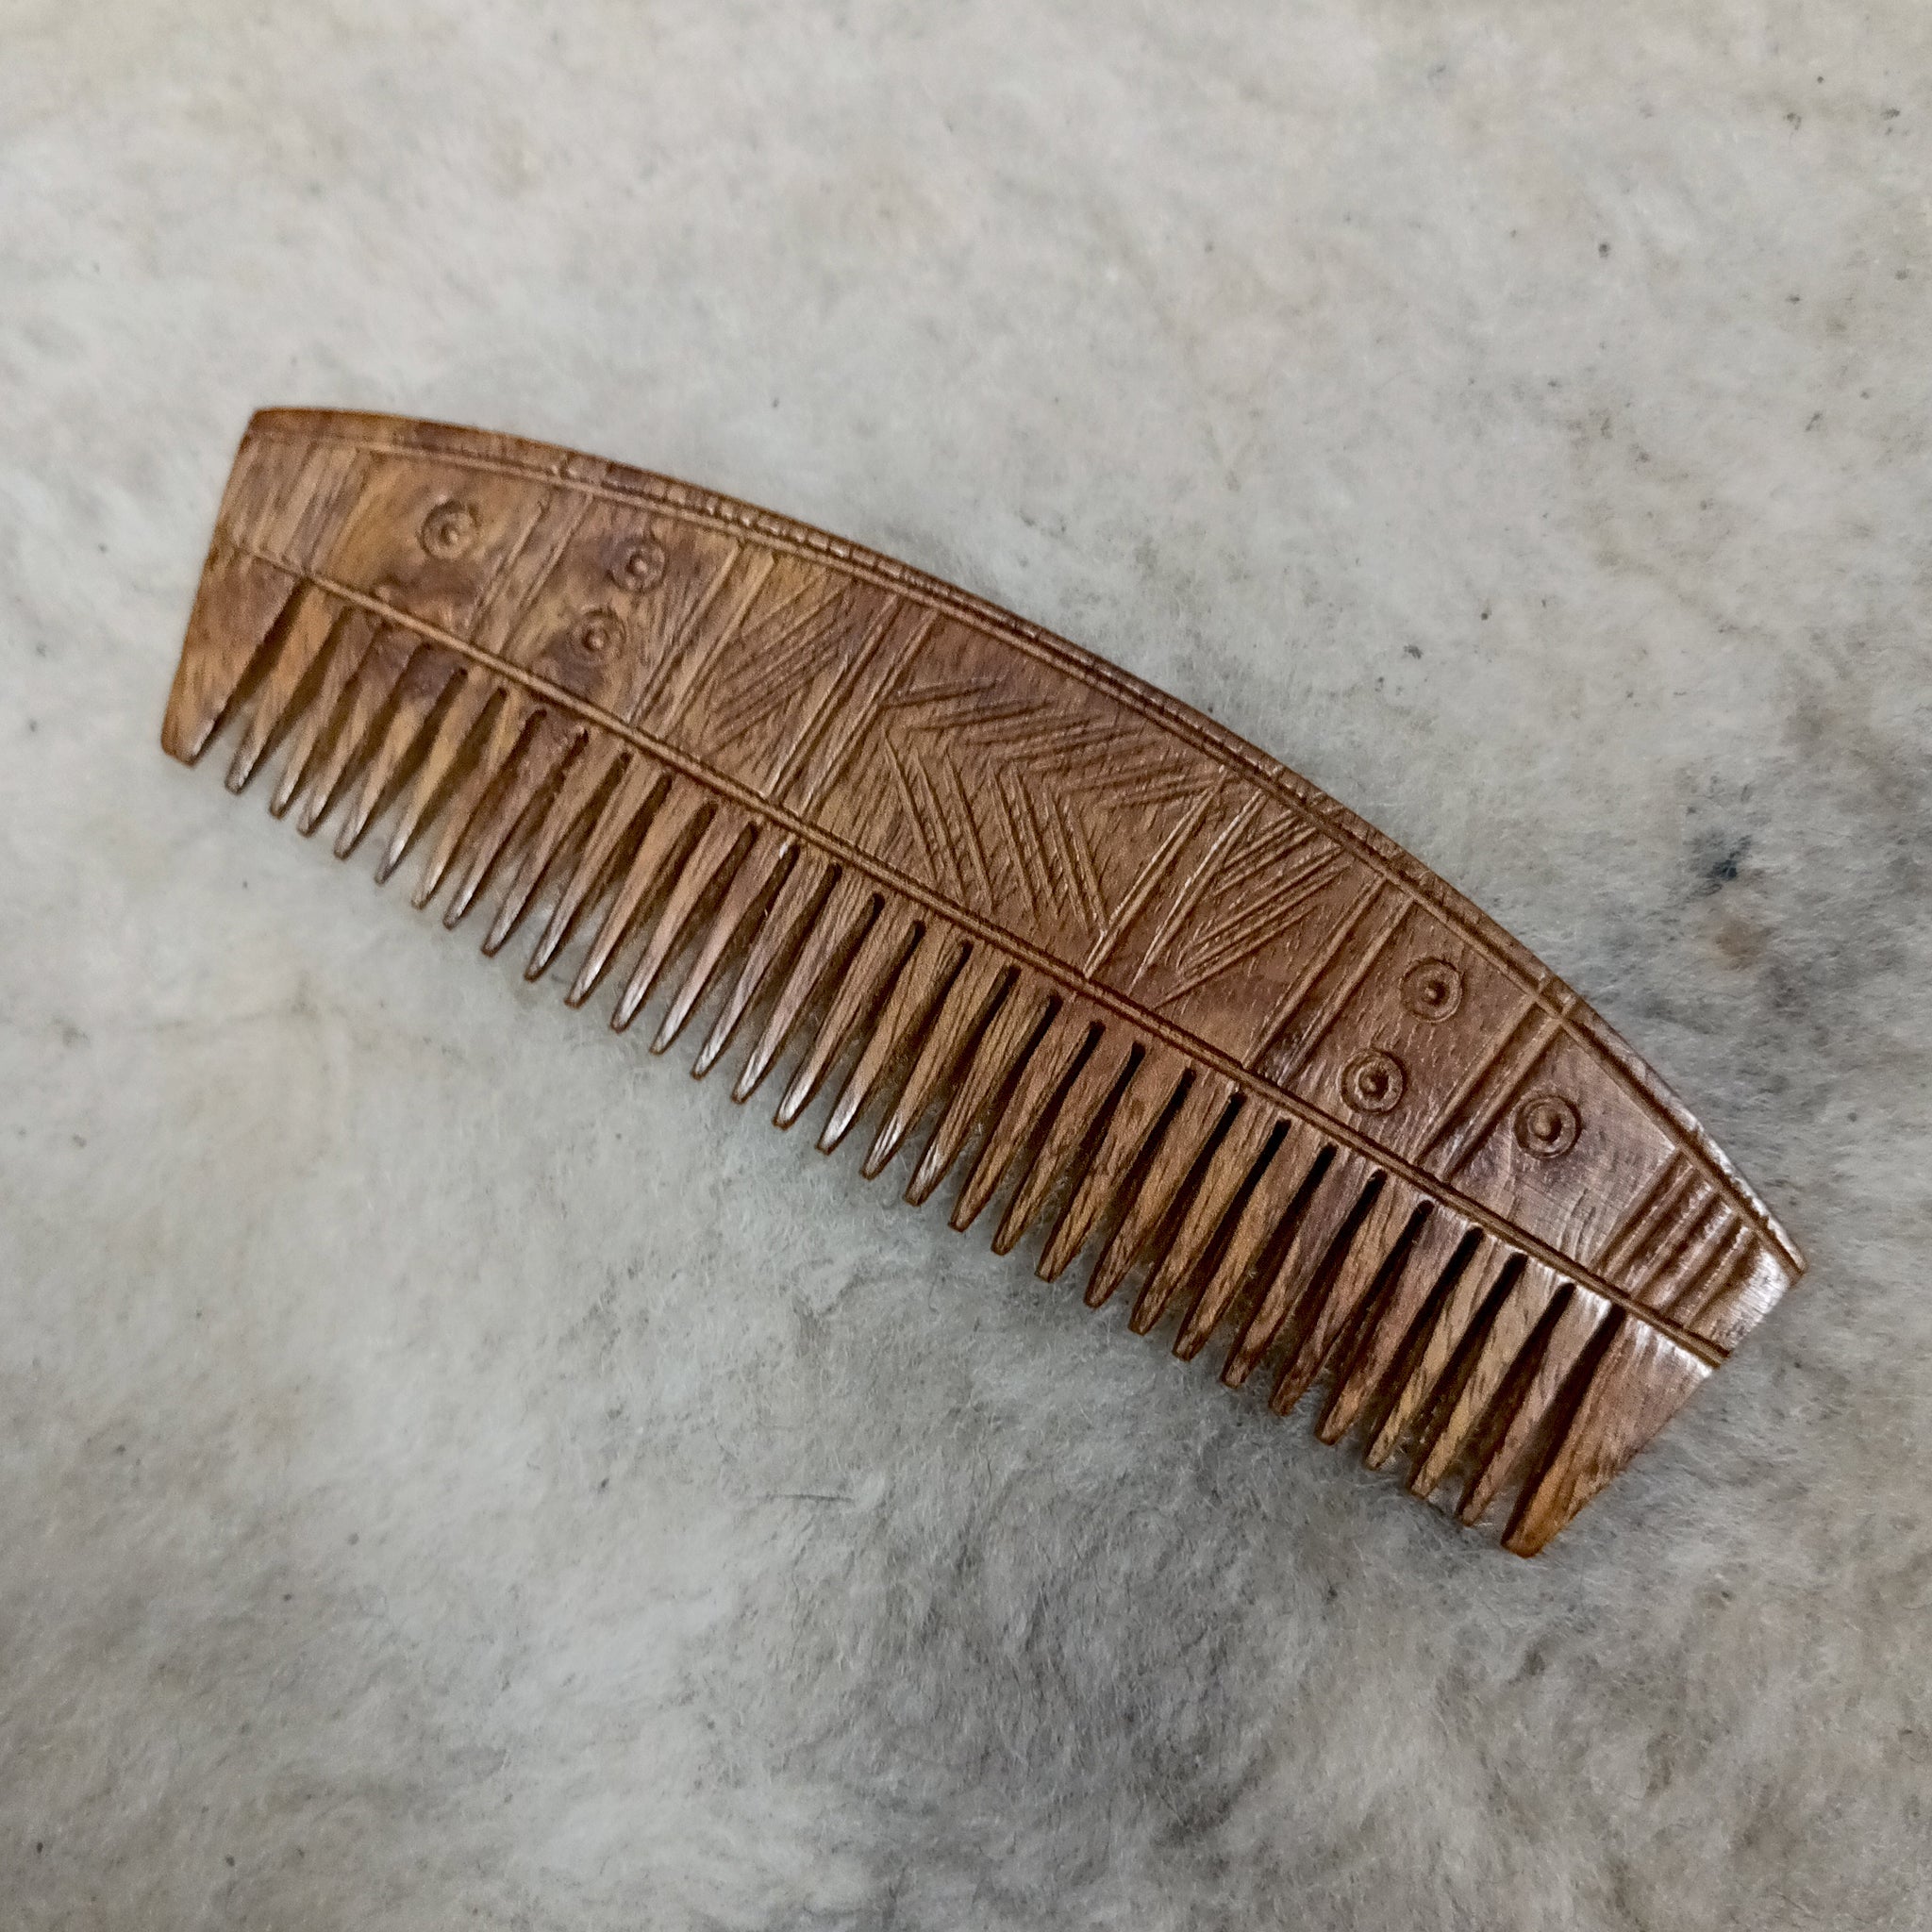 Handmade Decorated Wood Viking Comb on Wool